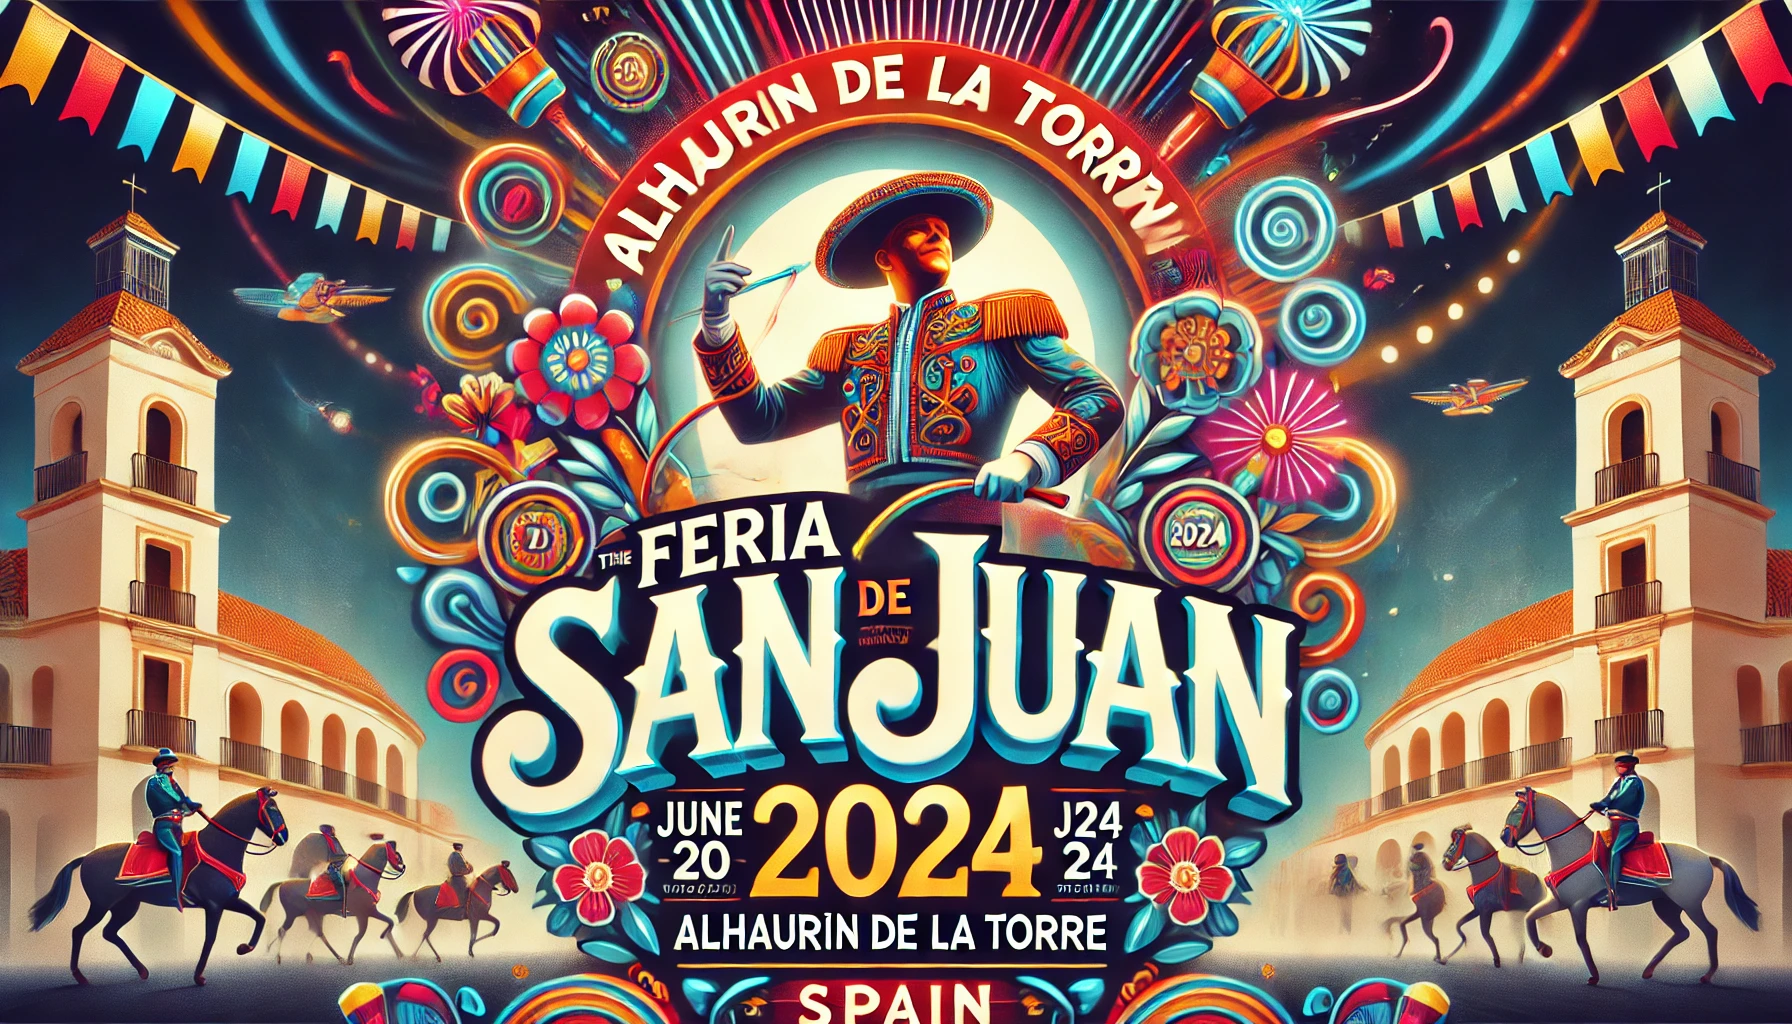 Del jueves 20 al lunes 24 de junio se celebra la Feria de San Juan en Alhaurín de la Torre 2024